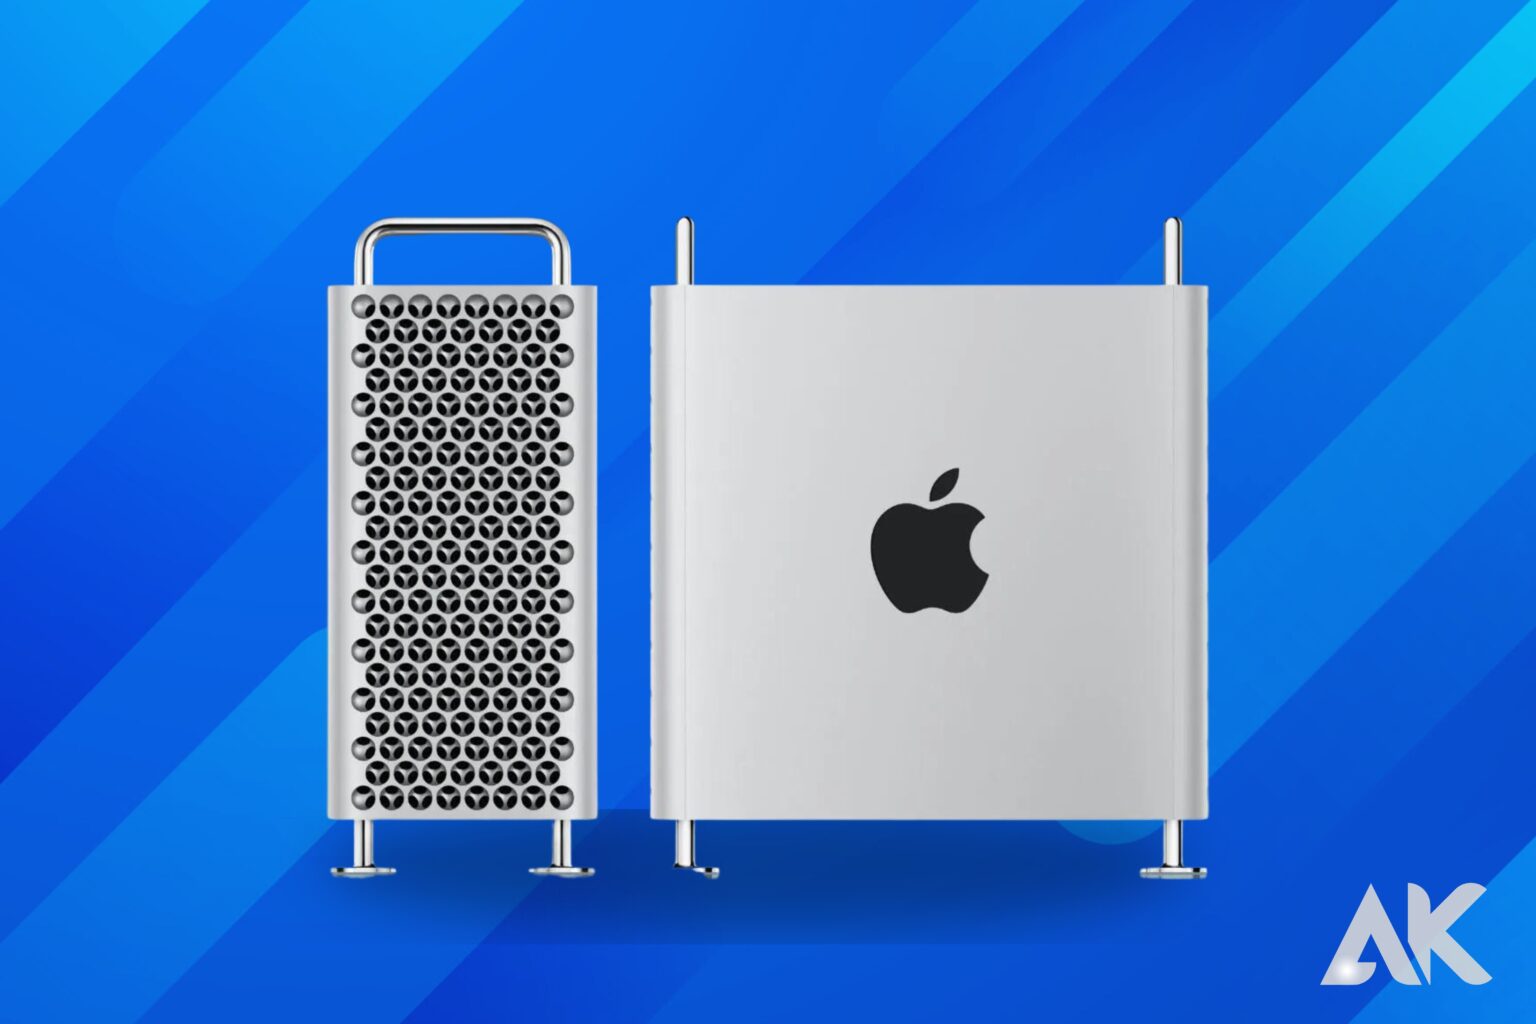 Apple Mac mini specifications